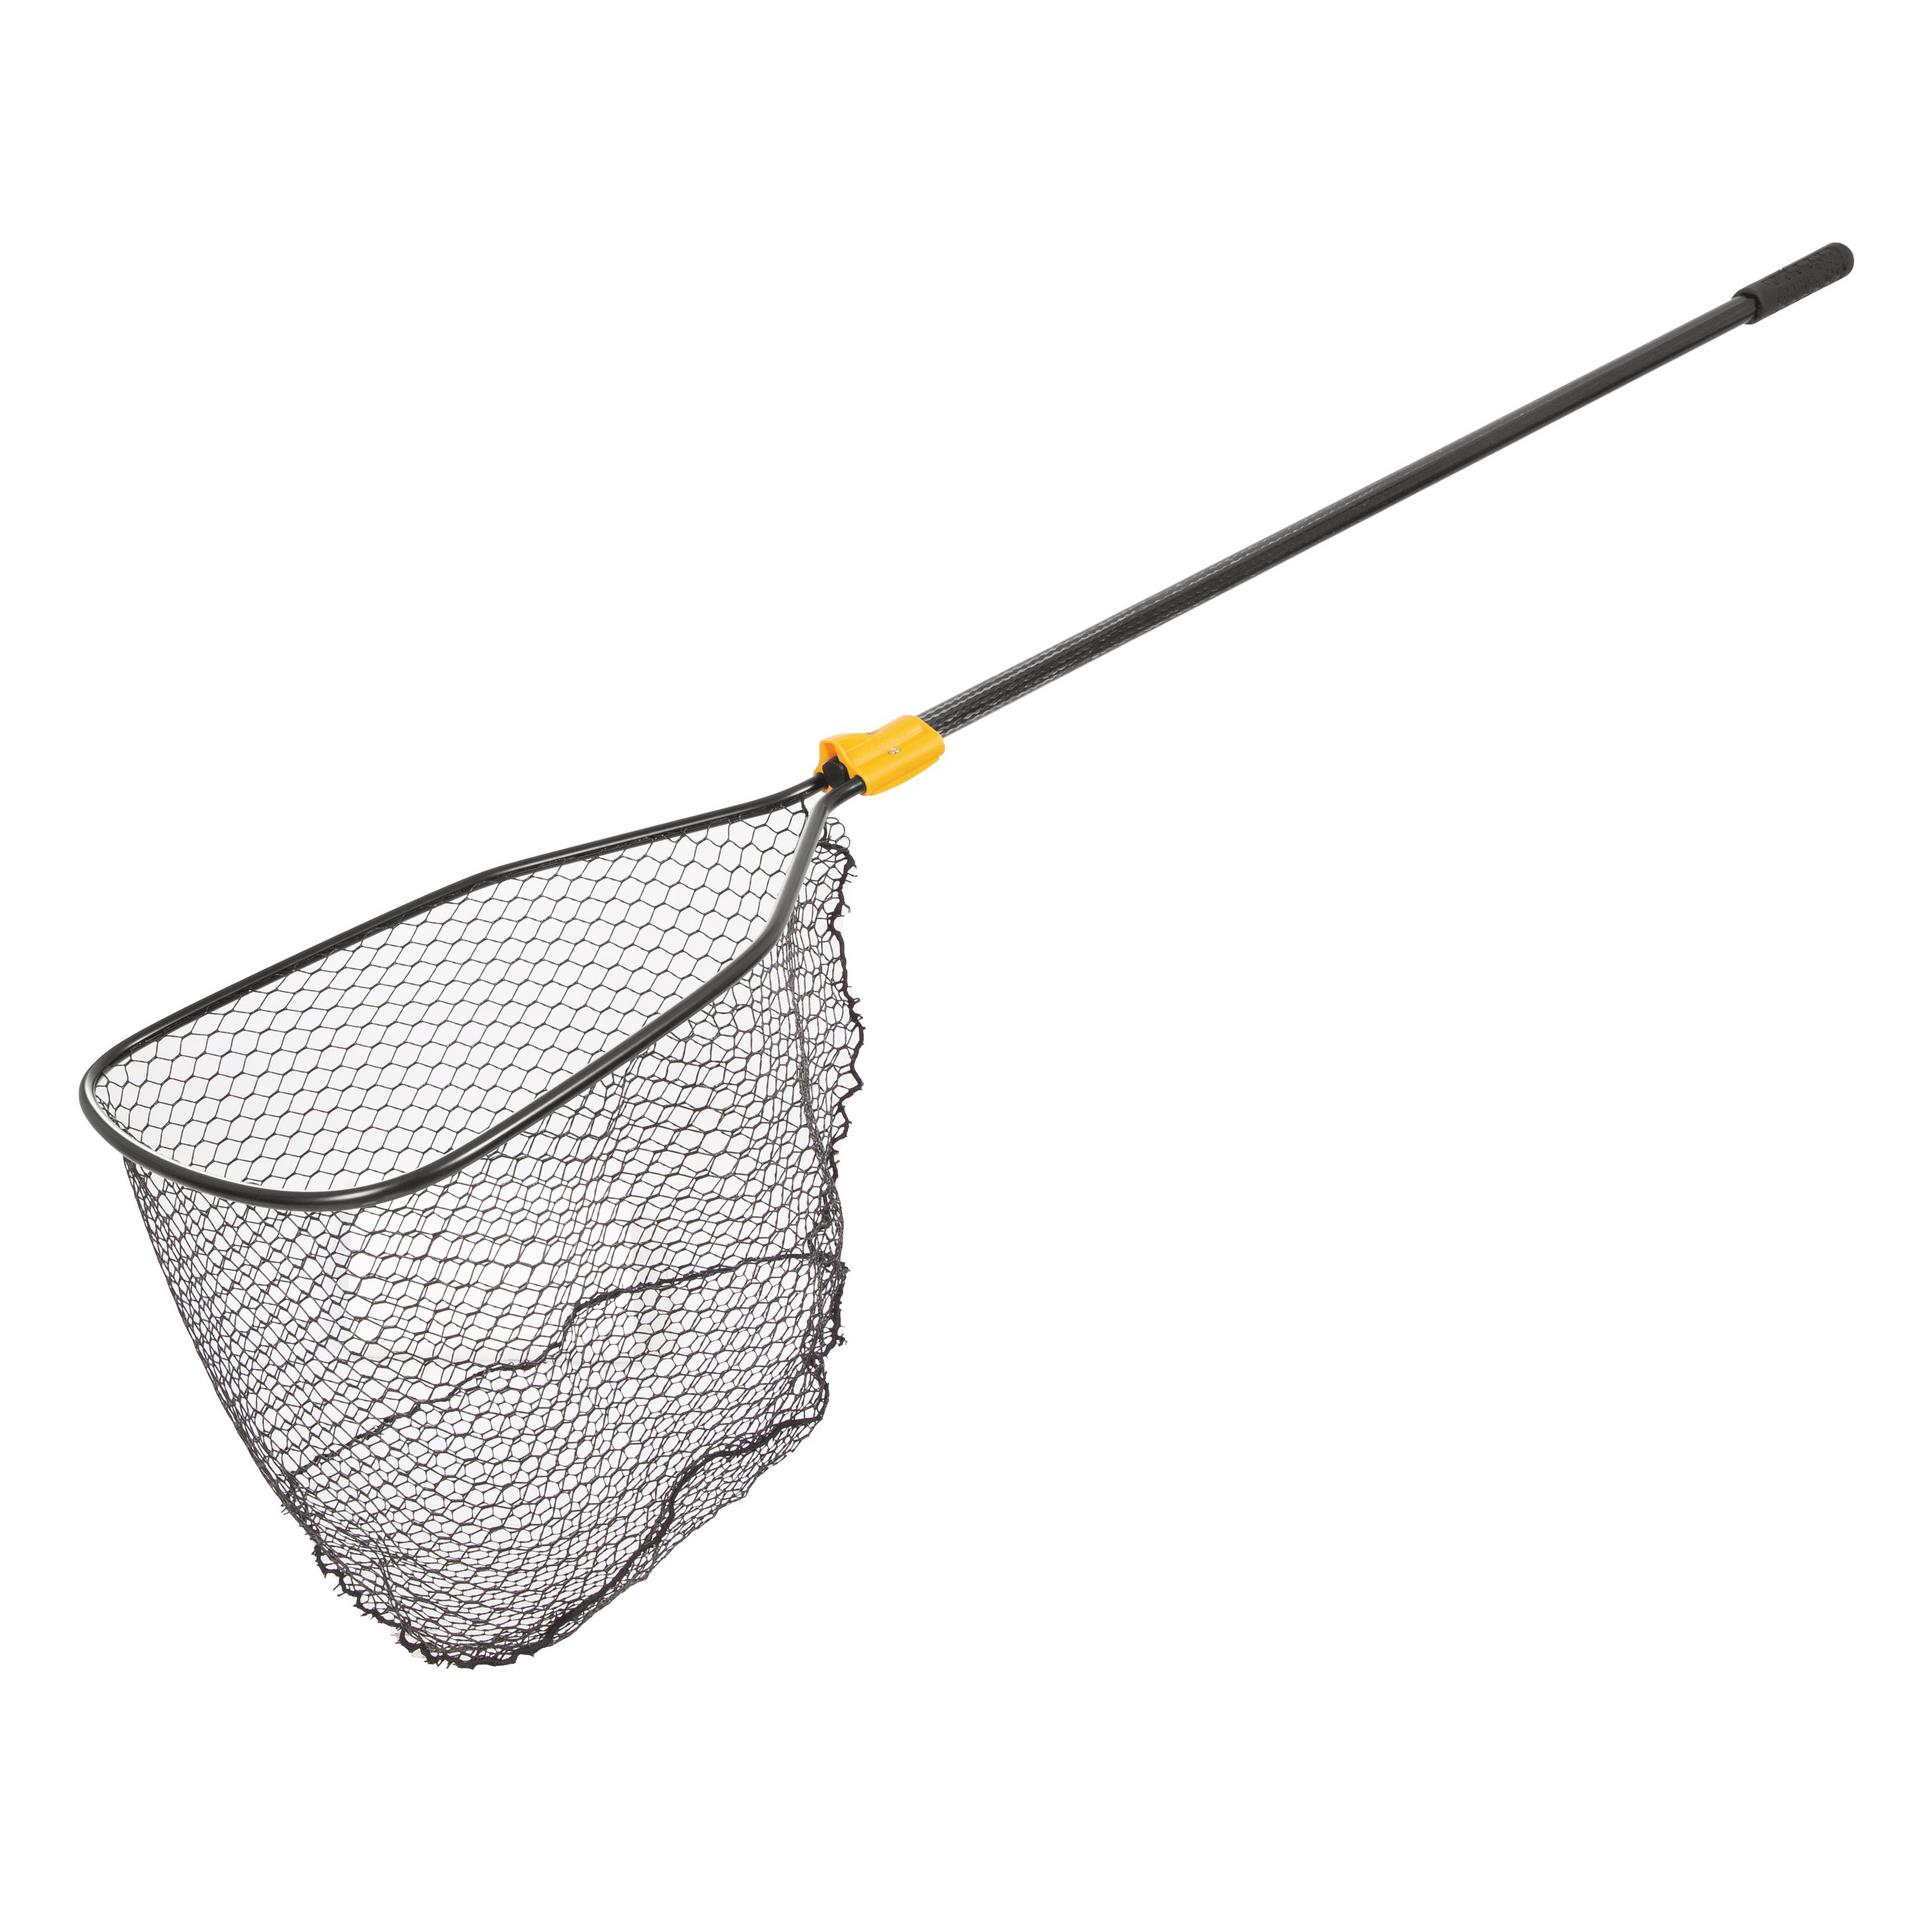 Frabill® Fishing Gear  Nets, Bait Management, Ice Fishing – Frabill Fishing